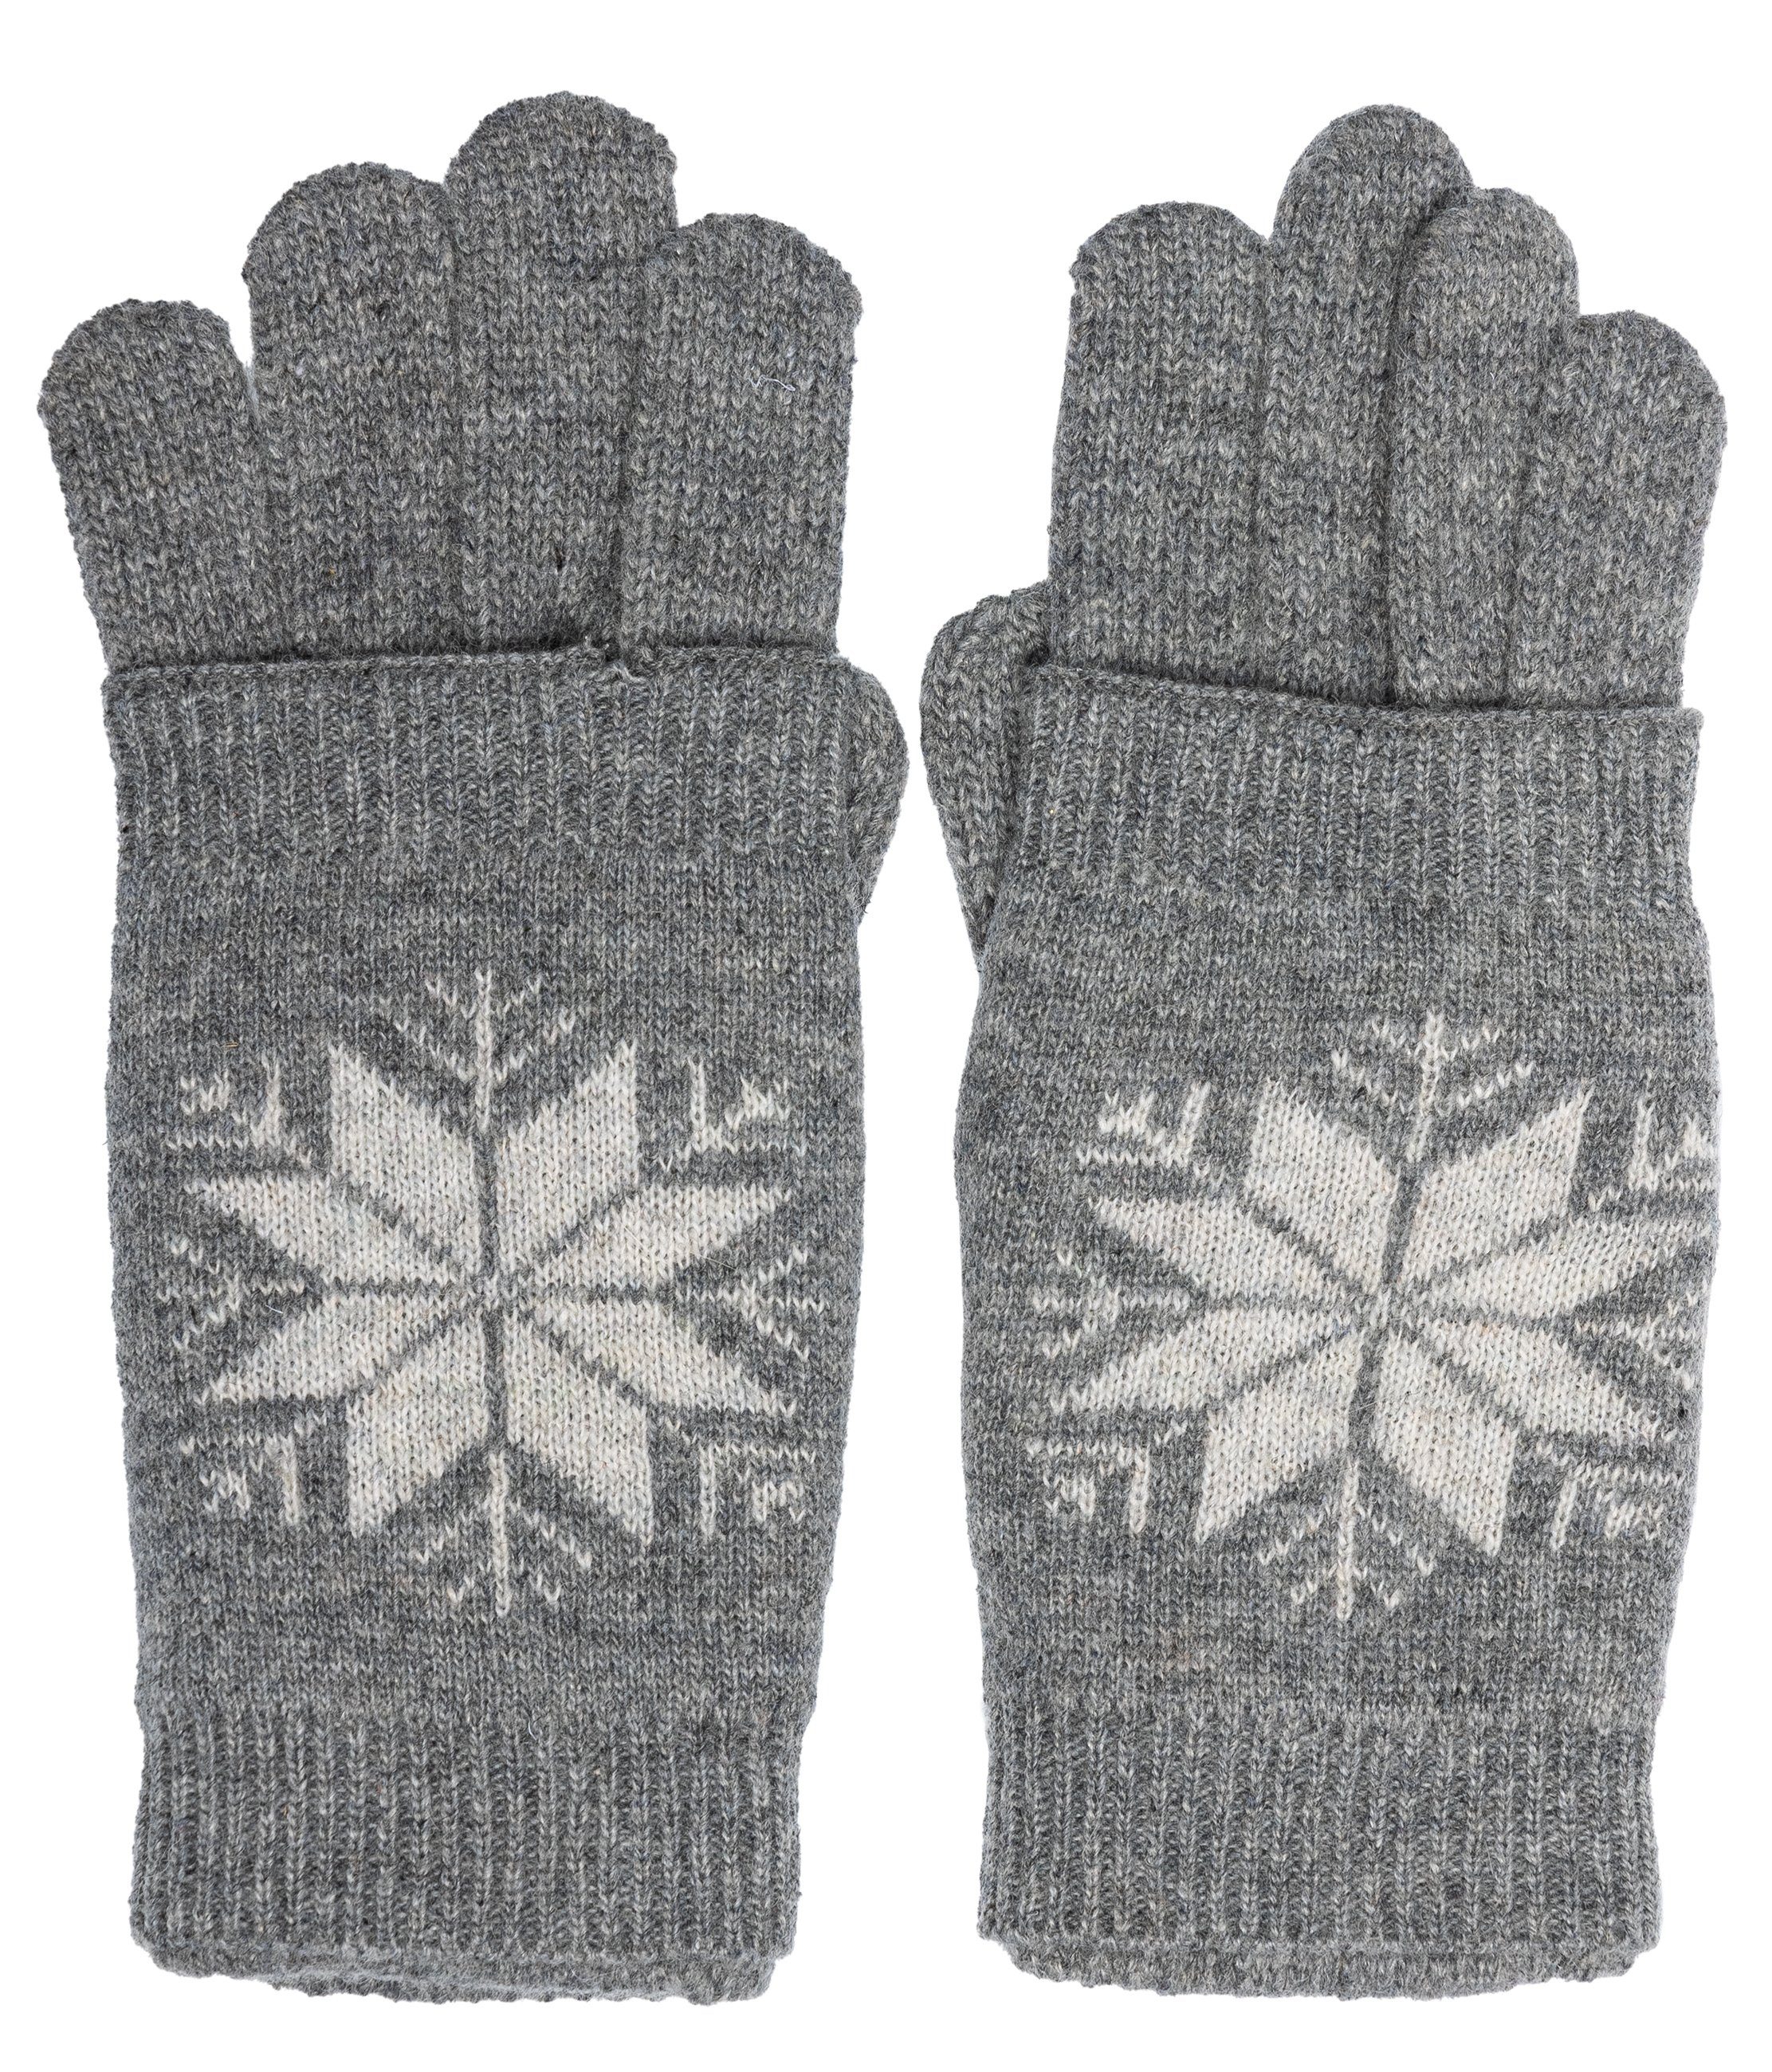 Strick Dekor Eiskristall Caspar Strickhandschuhe warme grau GLV018 Handschuhe Damen mit